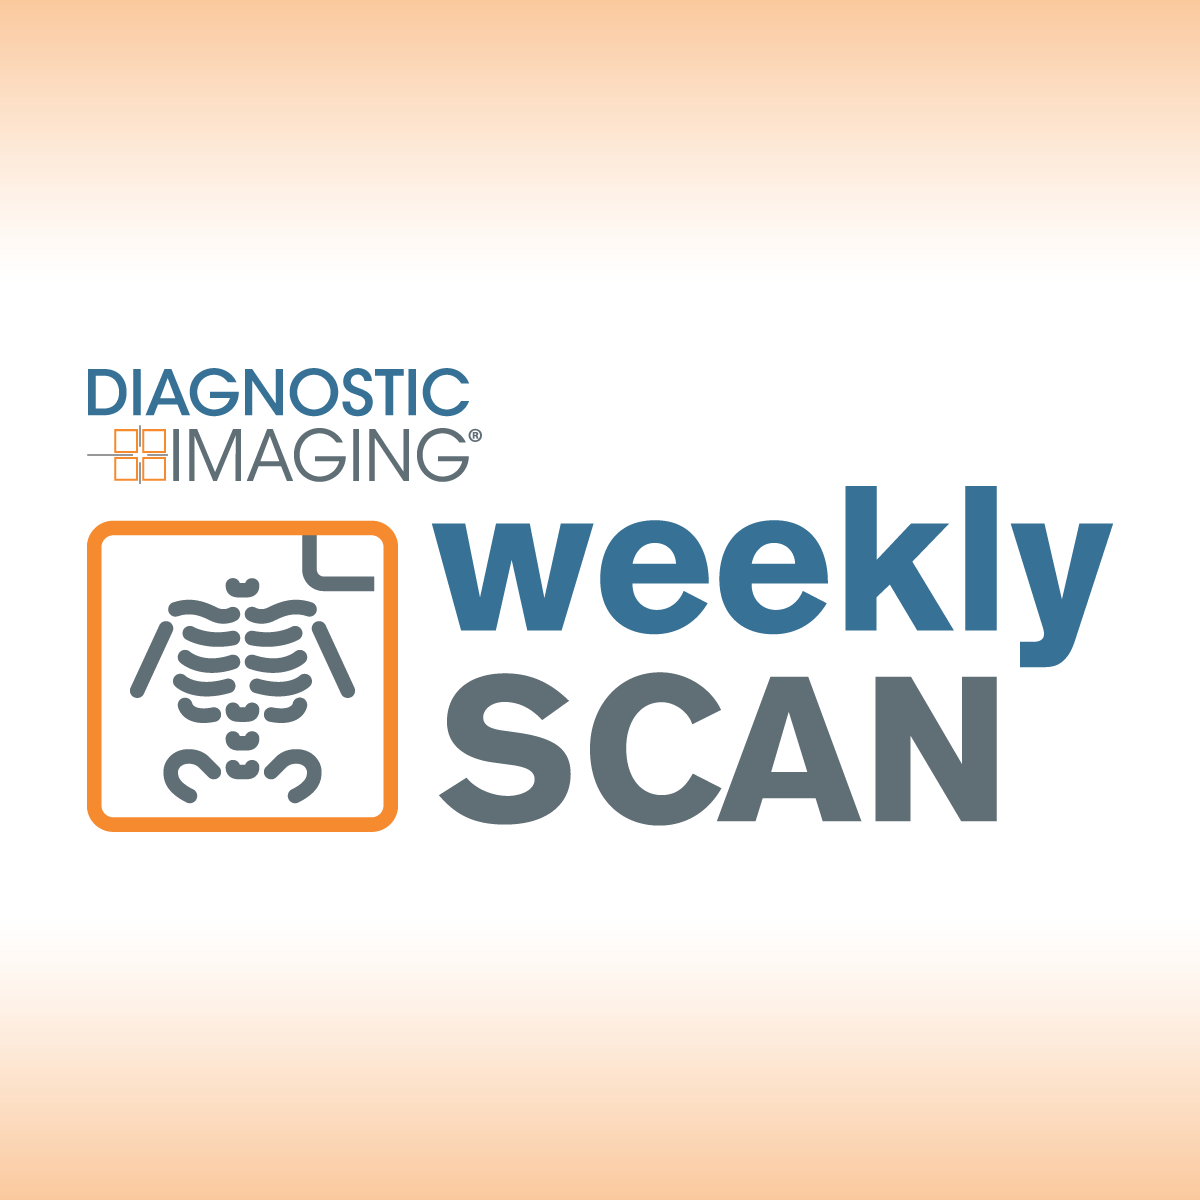 Diagnostic Imaging's Weekly Scan: November 26-December 2